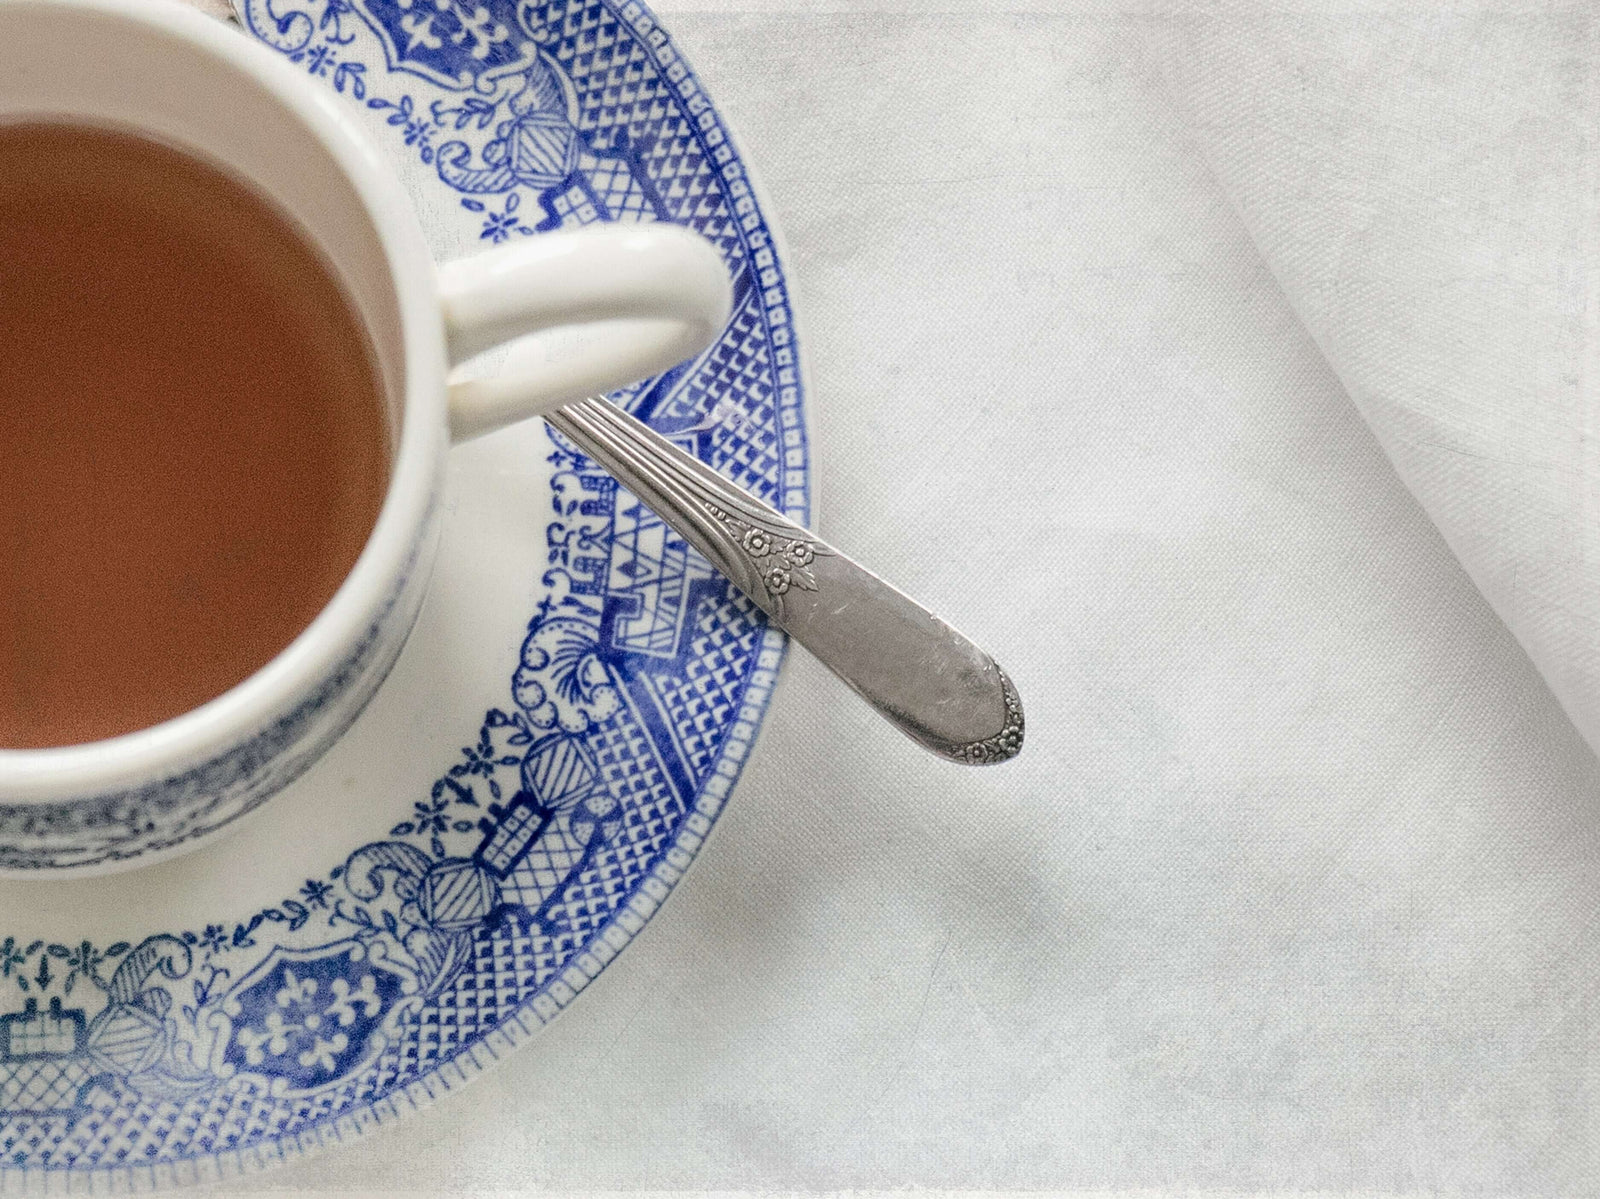 The King of Teas: Earl Grey